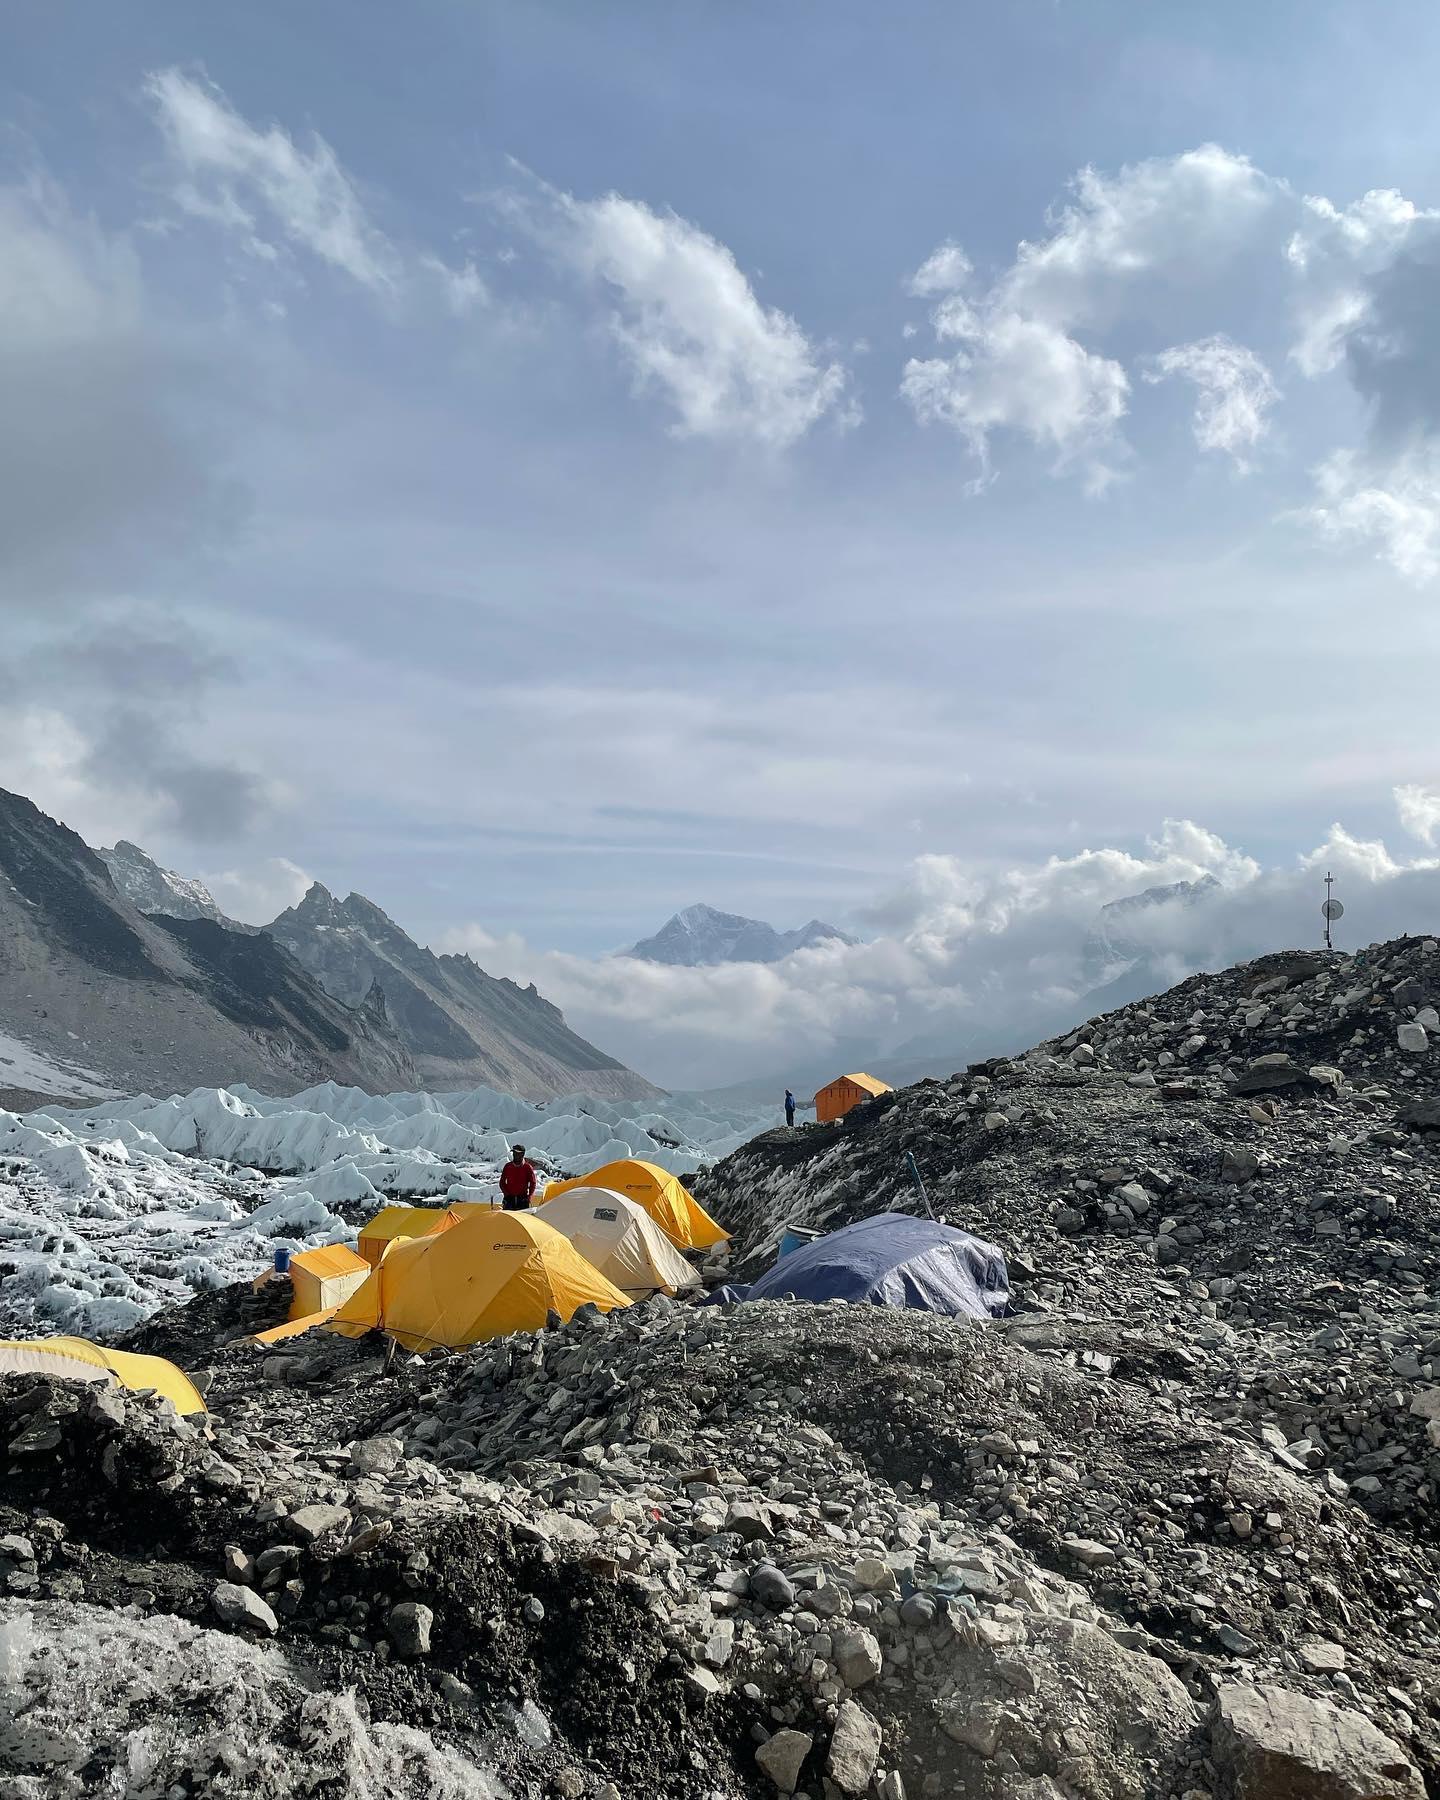 Mount Everest Base Camp tents accommodation